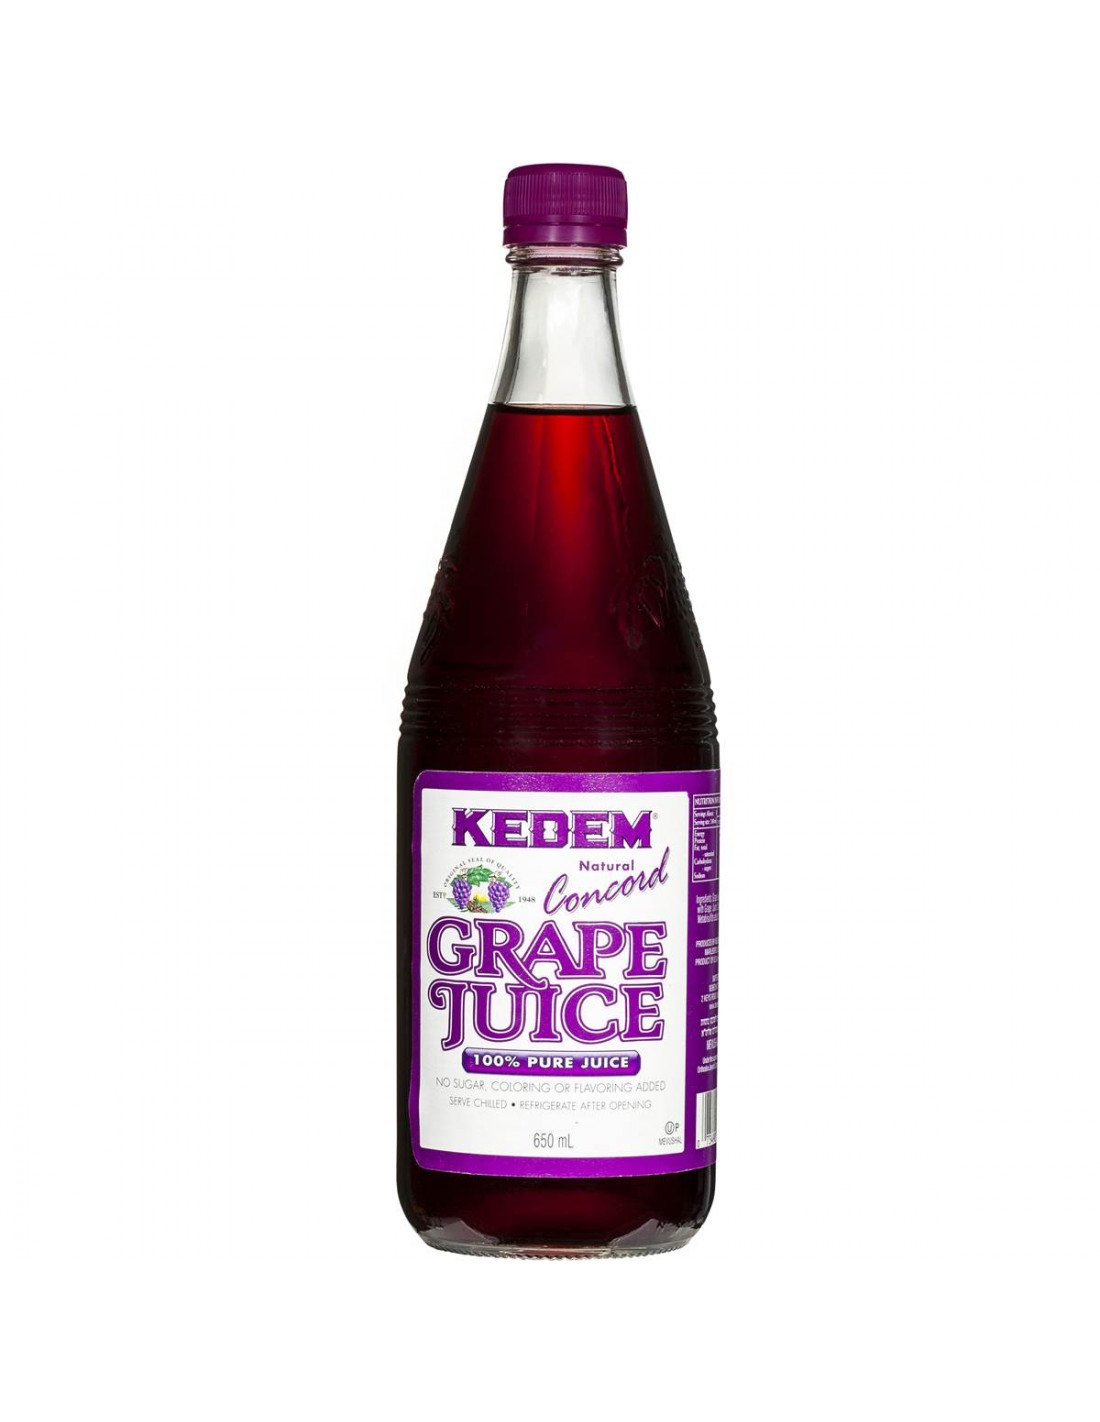 650 ml of Kadem Grape Juice | Challah Online